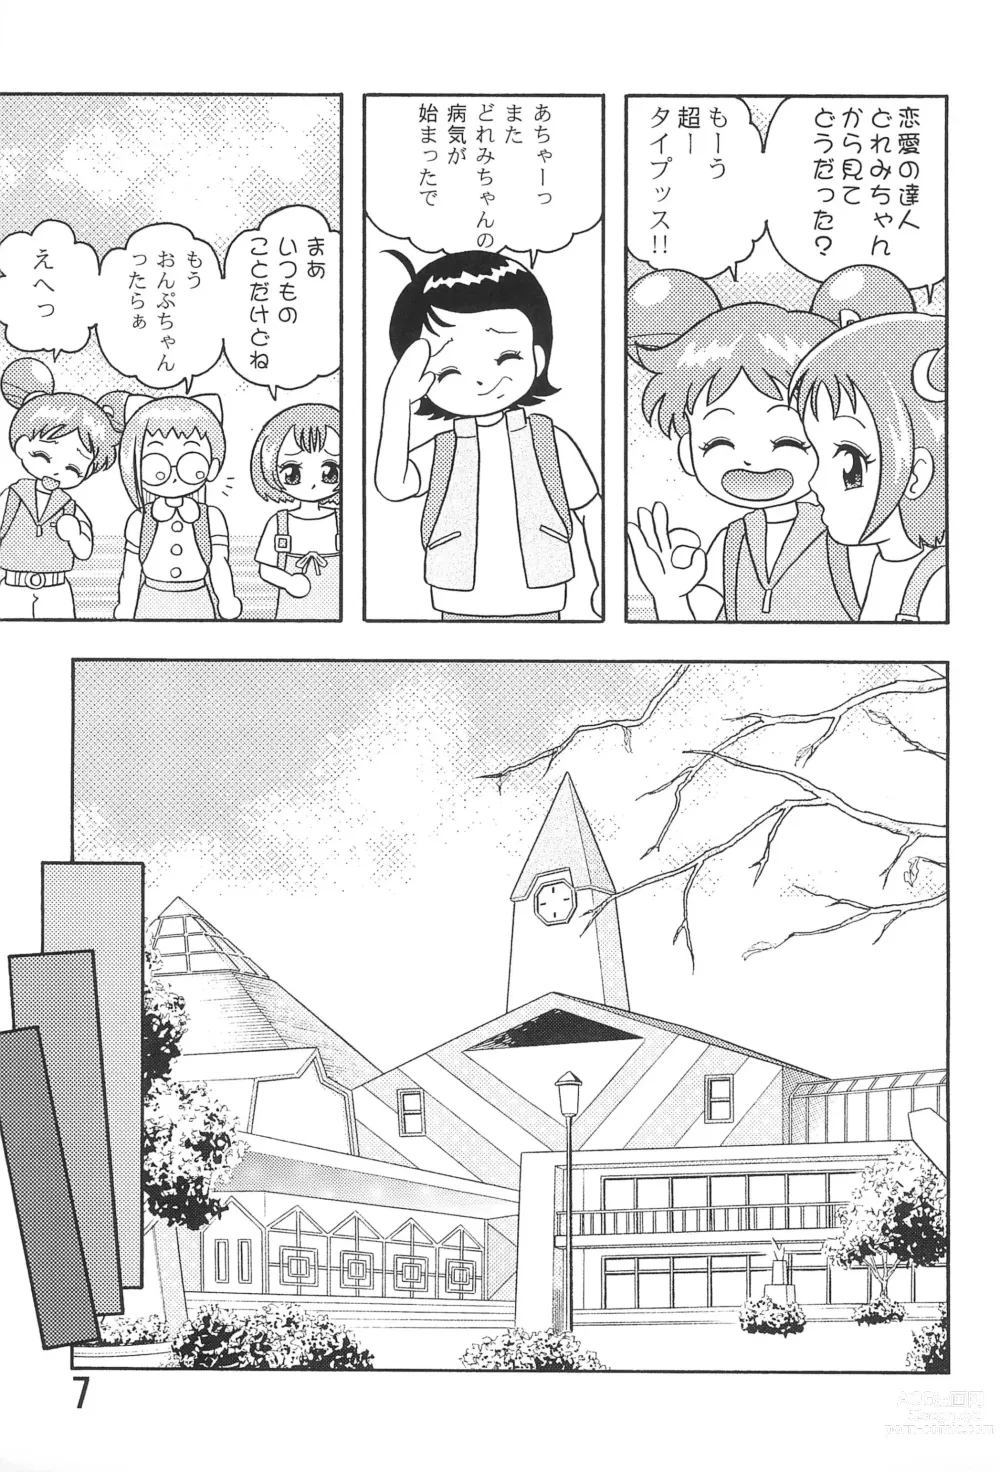 Page 9 of doujinshi 5 Nen 1 Kumi Mahougumi 2